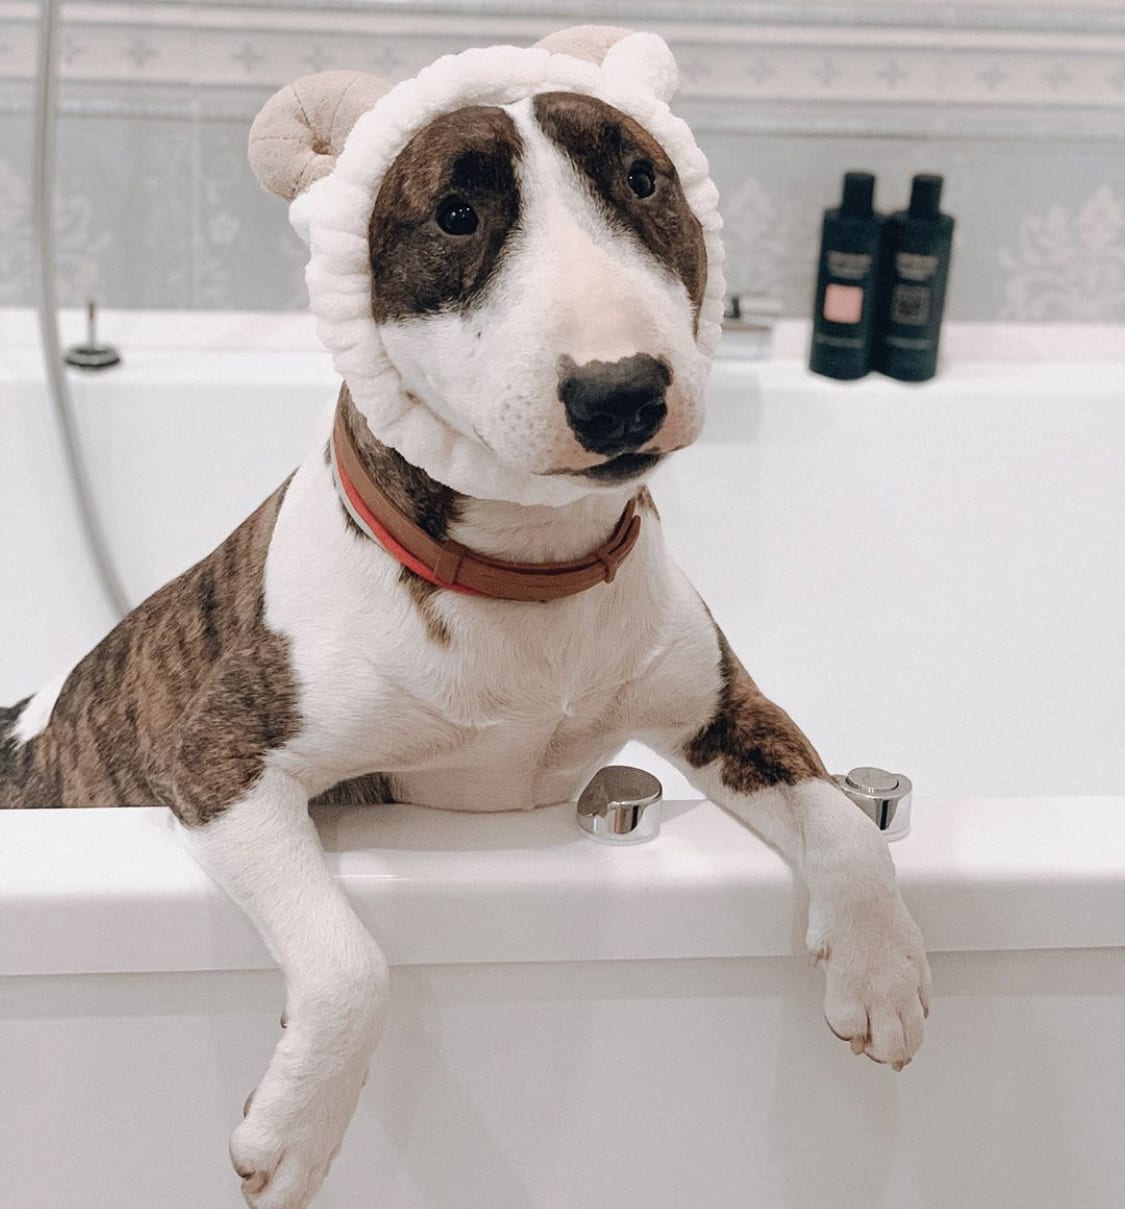 Bull Terrier inside the bath tub